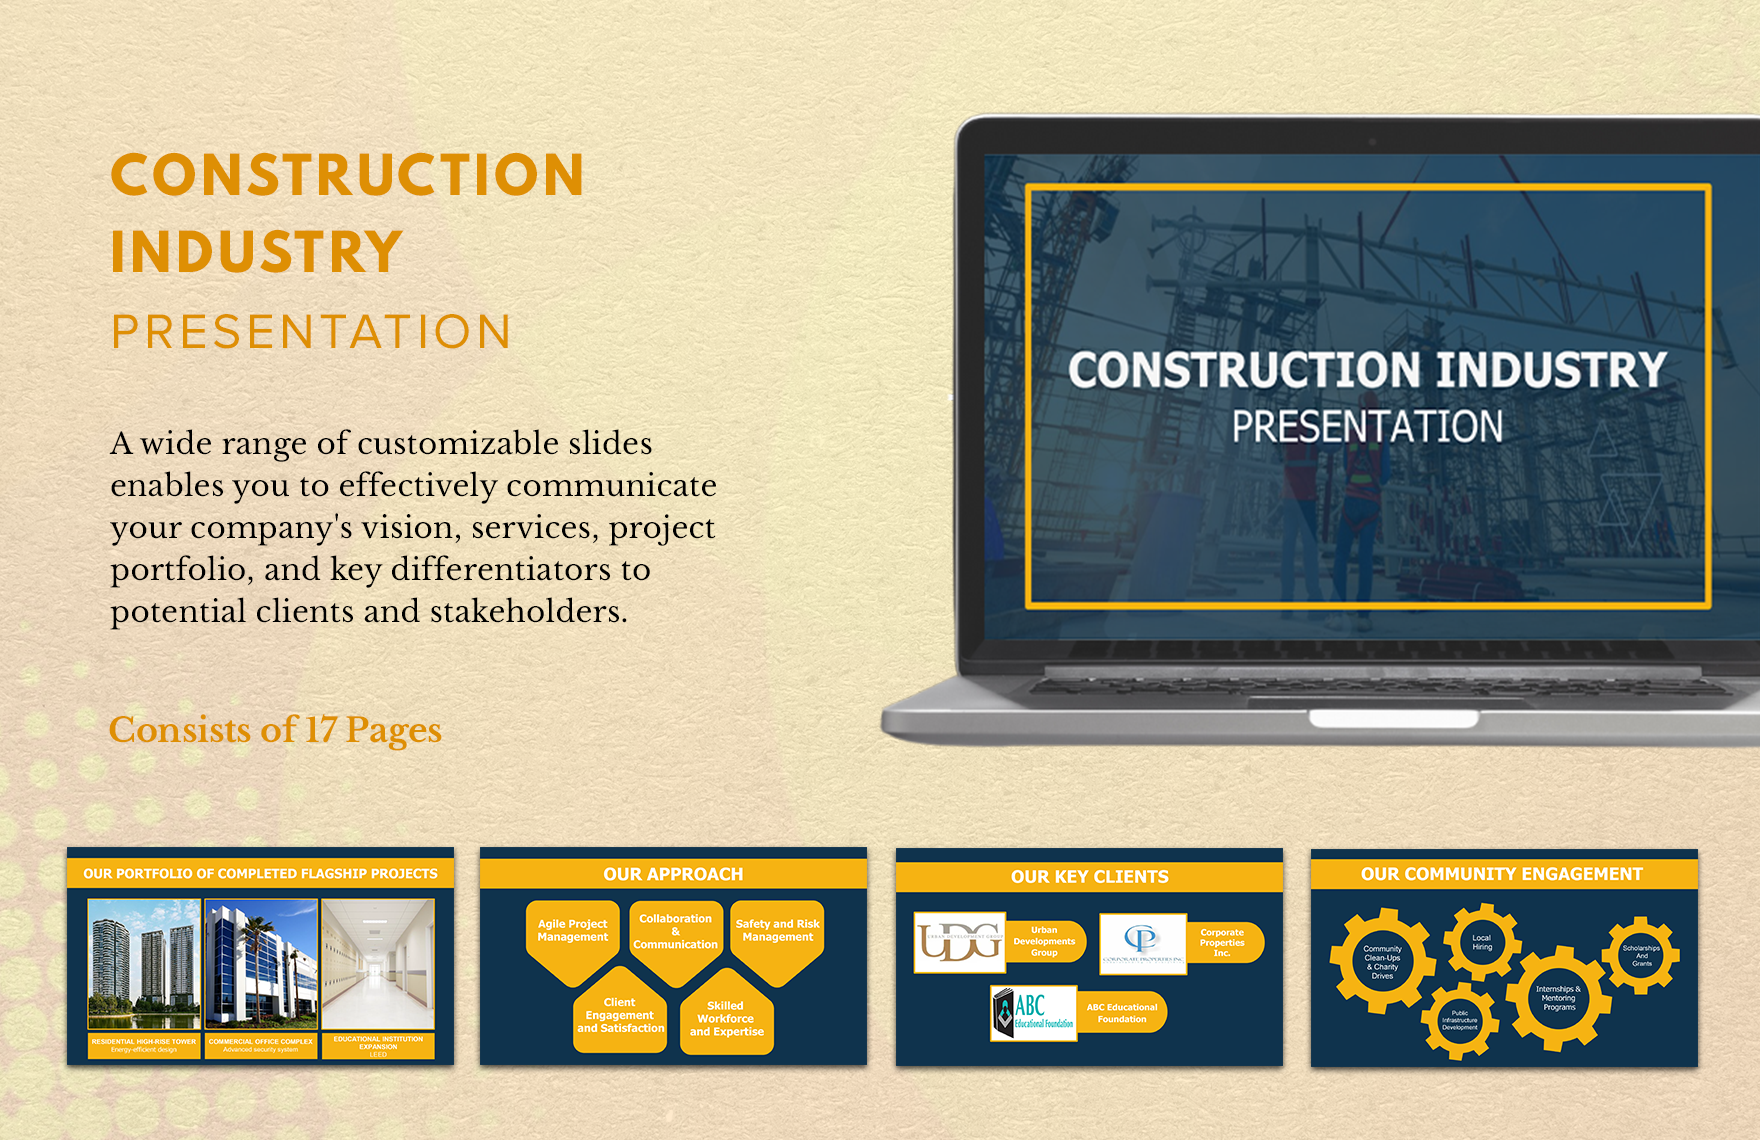 Construction Industry Presentation